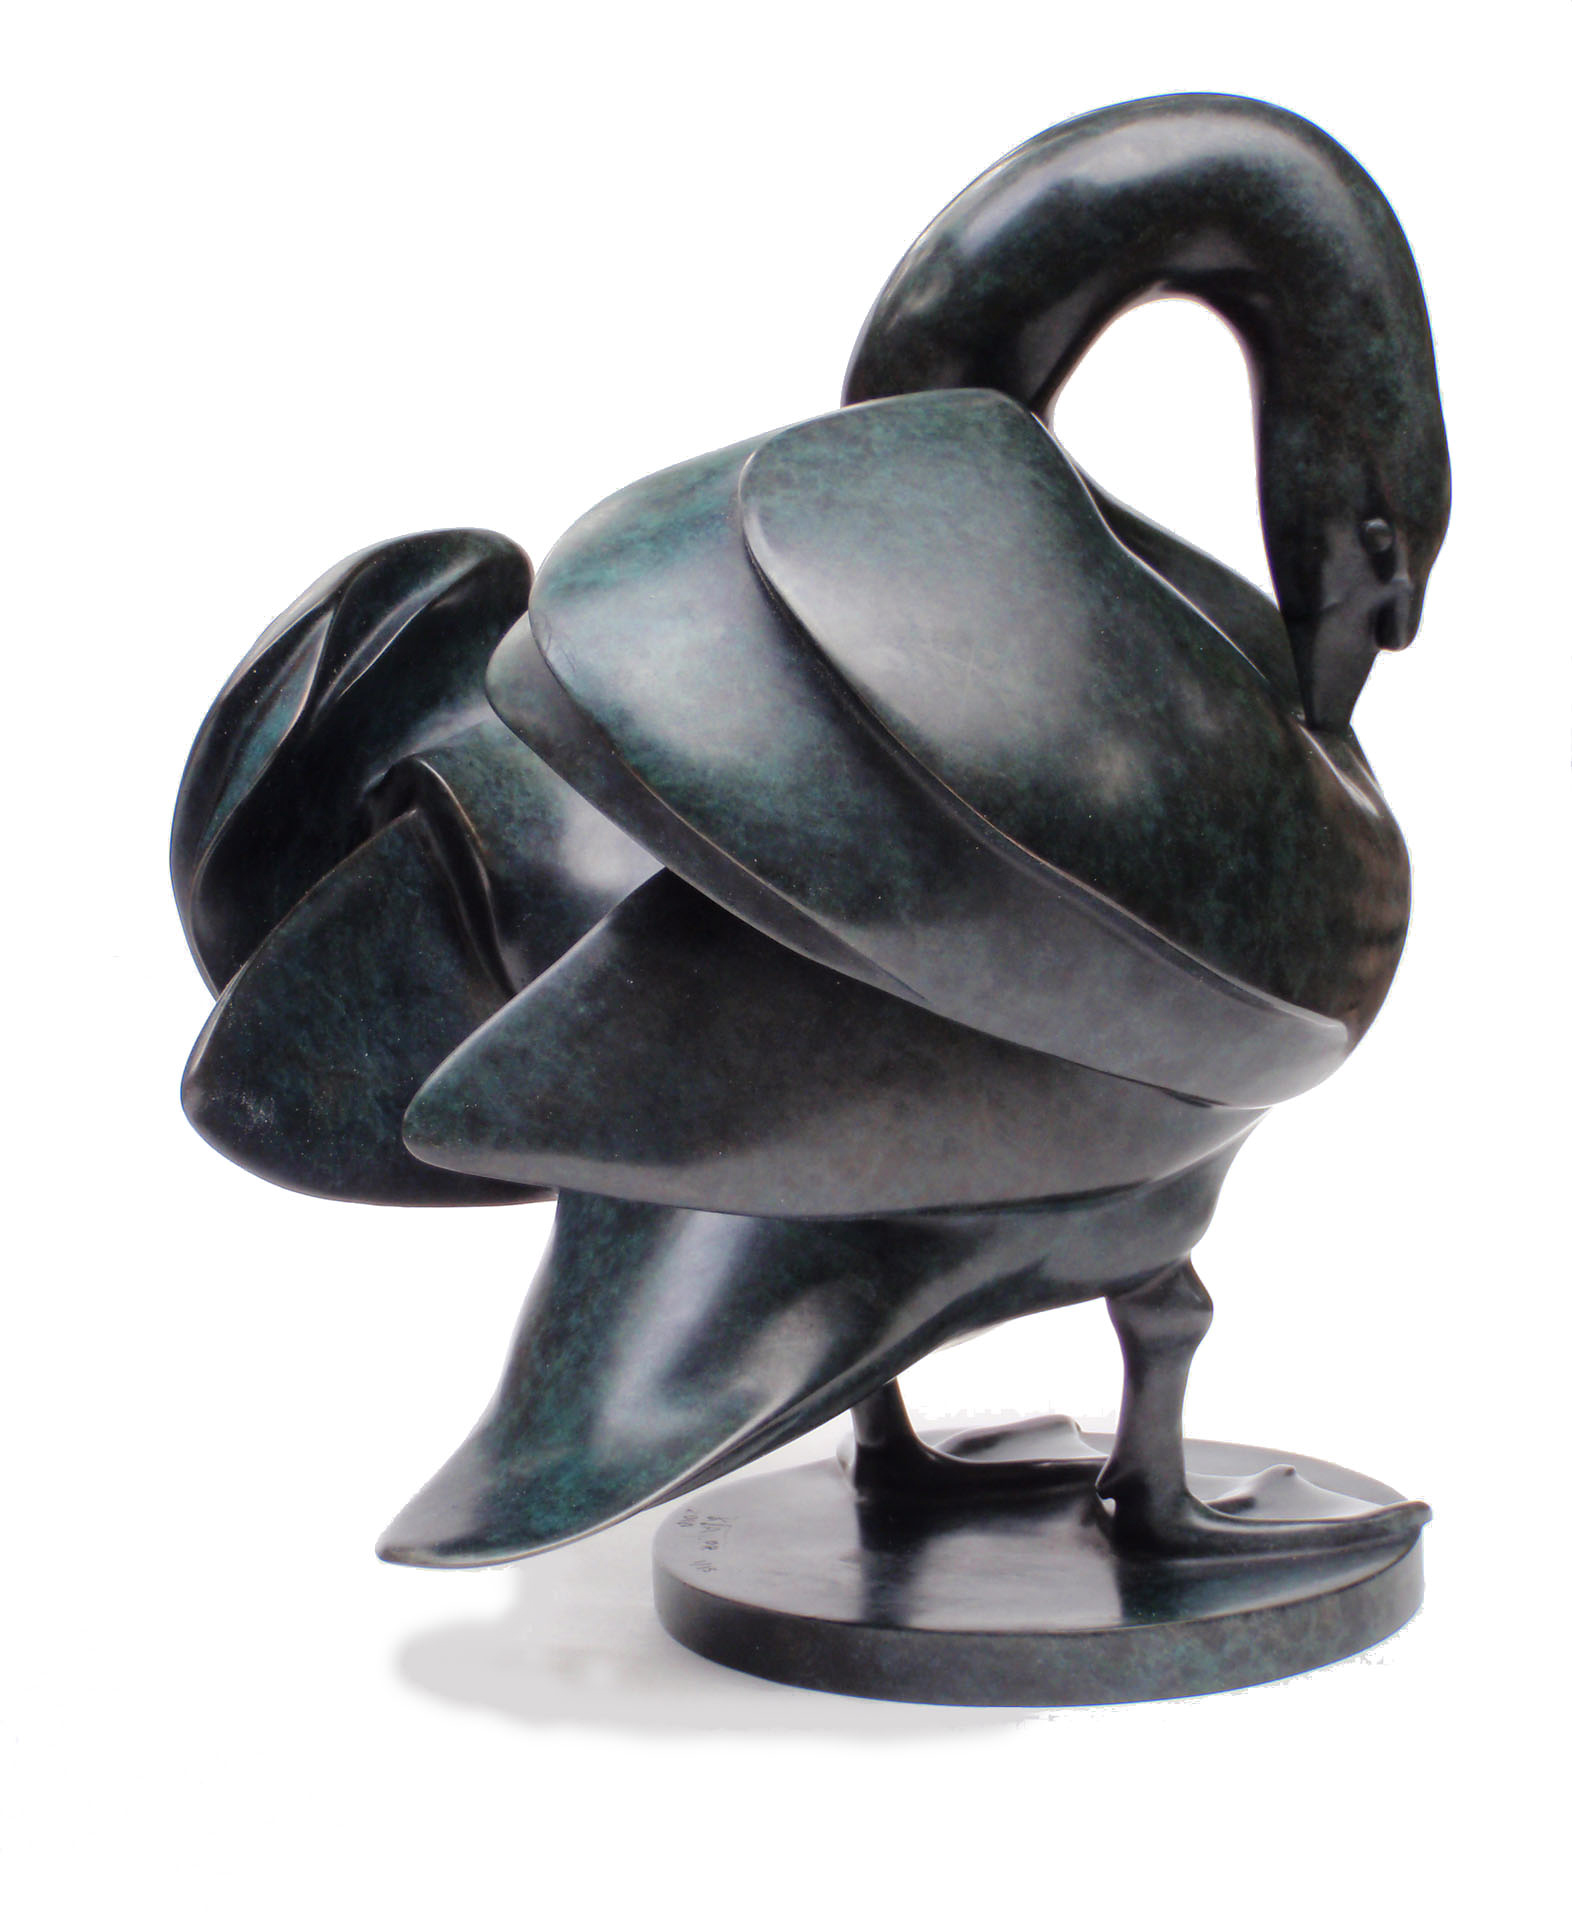 Preening Swan
by Kristine Taylor
Bronze
9.5